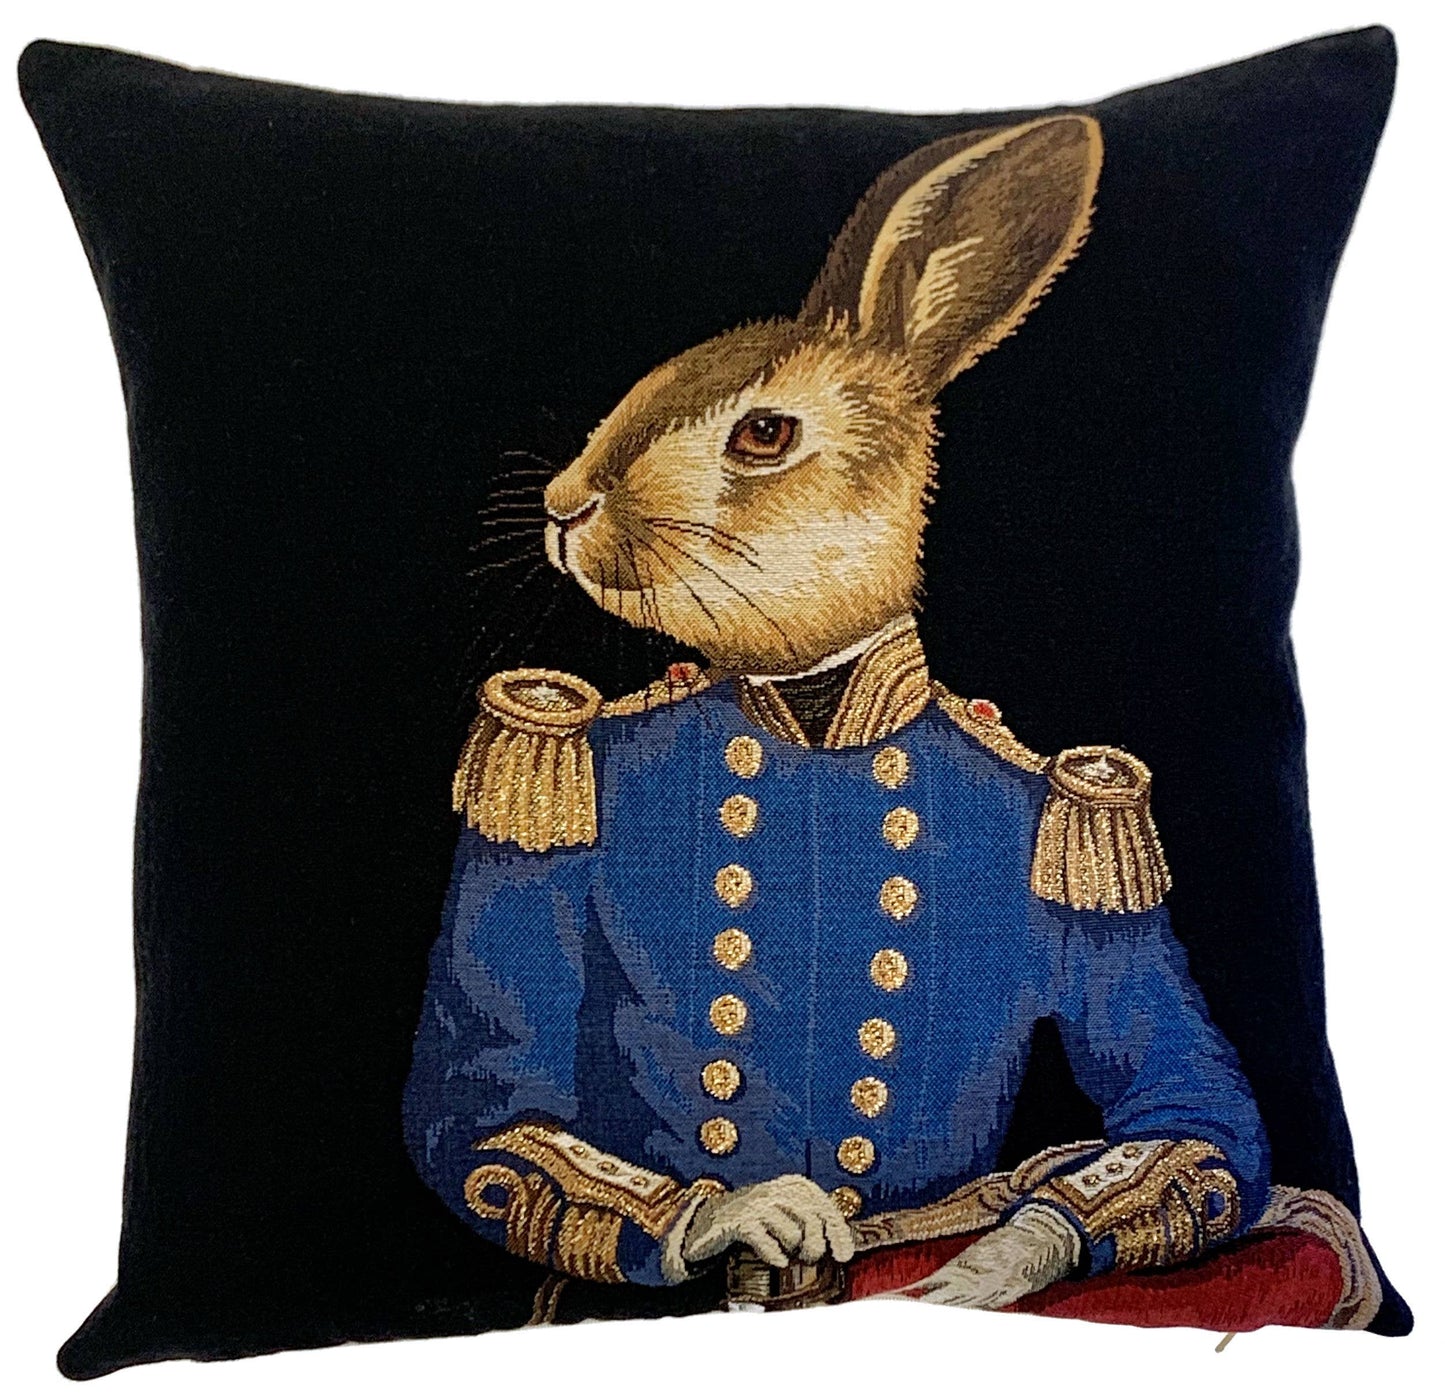 Hare pillow cover - Woodland Decor - Rabbit Throw Pillow